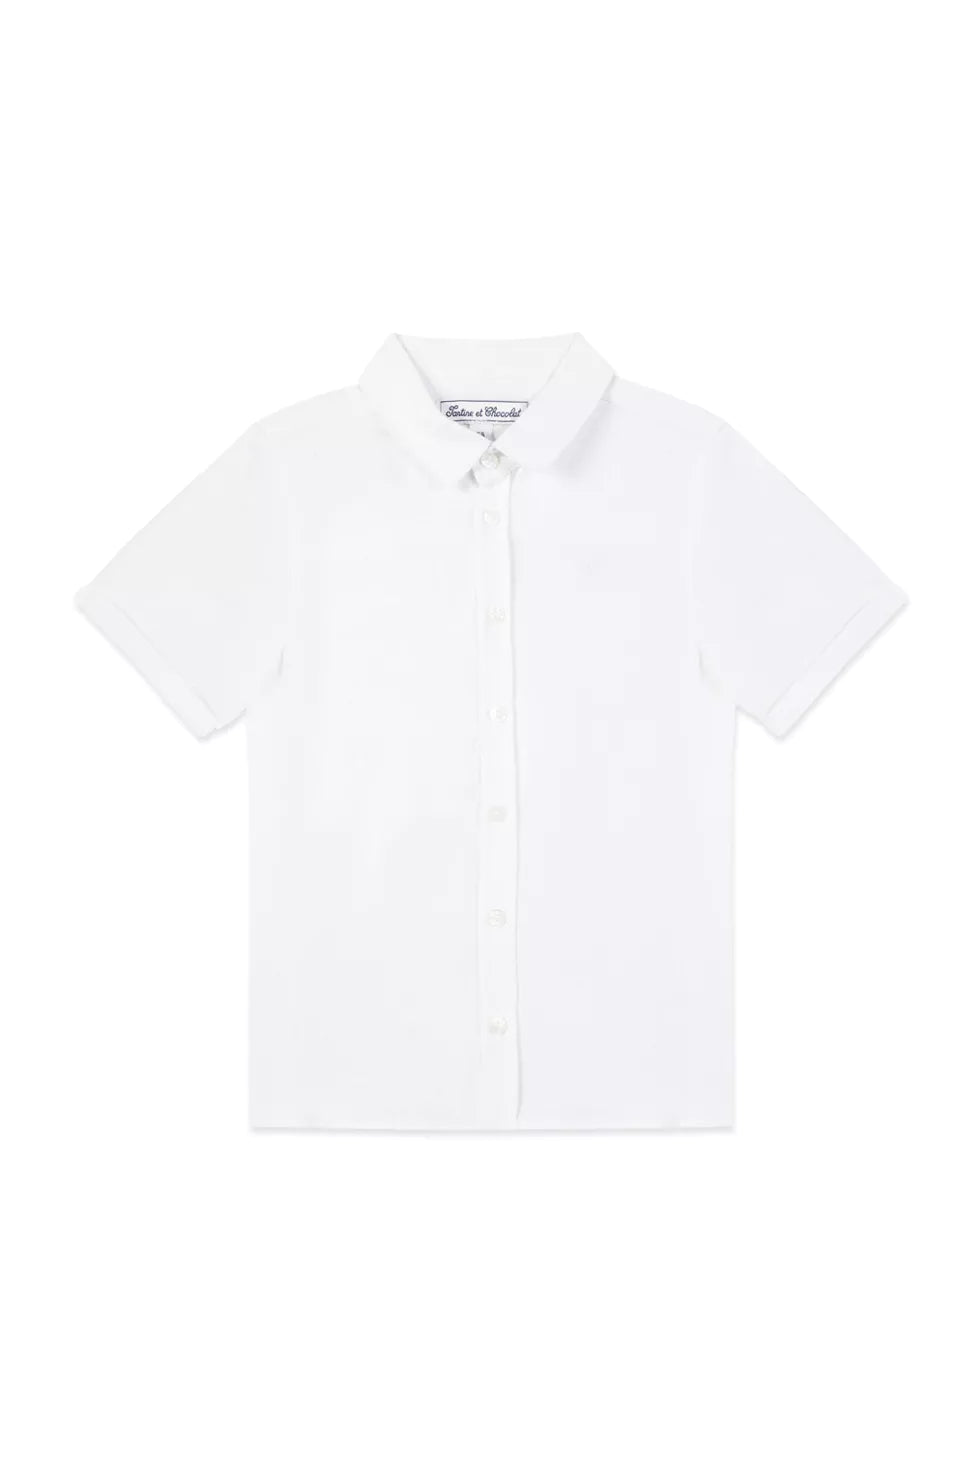 Tartine Boys Short Sleeve Button Down - Blanc